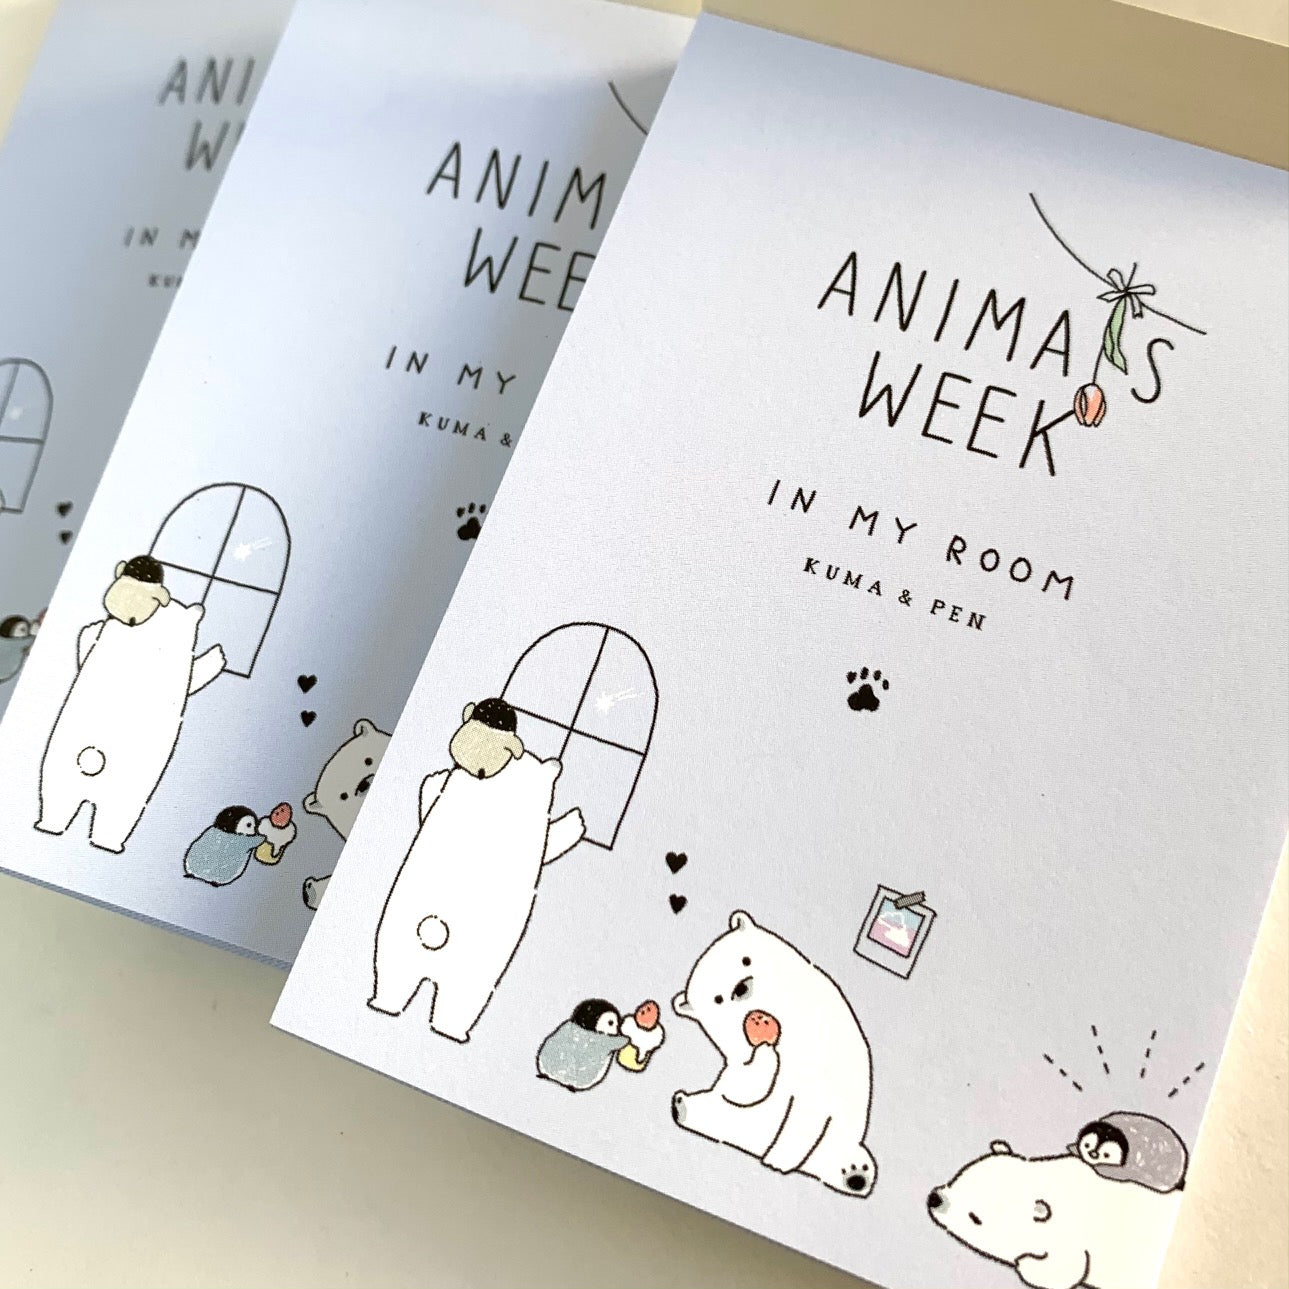 X 101101 CRUX Animals Week Penguin & Polar Bear Mini Notepads-DISCONTINUED